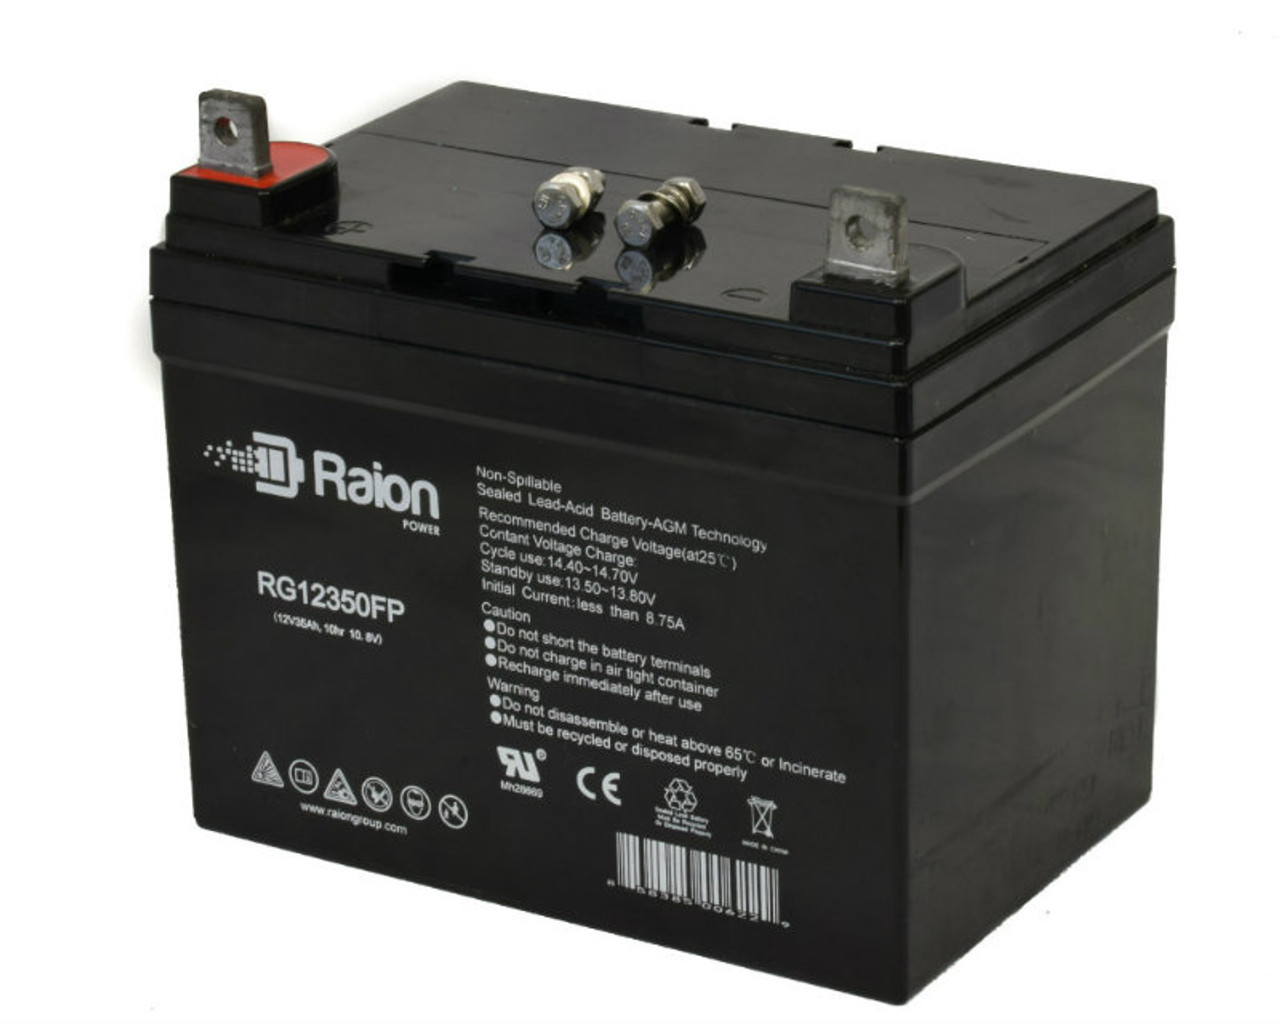 Raion Power Replacement 12V 35Ah RG12350FP Battery for Yard-Man J694H